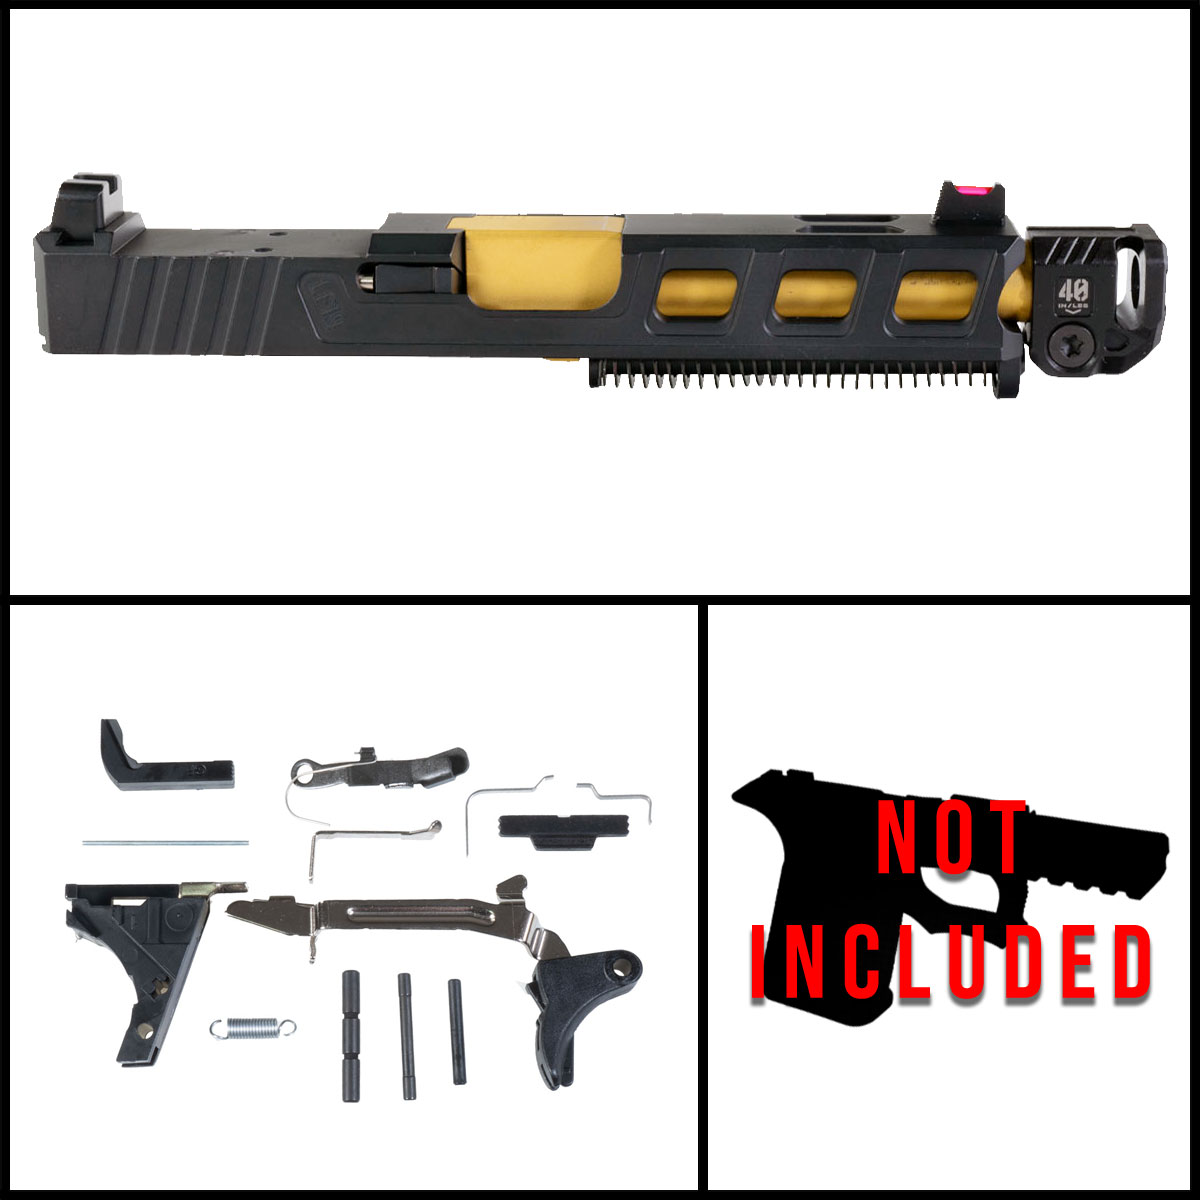 DTT 'Dangan w/ Strike Industries Compensator' 9mm Full Pistol Build Kit (Everything Minus Frame) - Glock 19 Gen 1-3 Compatible